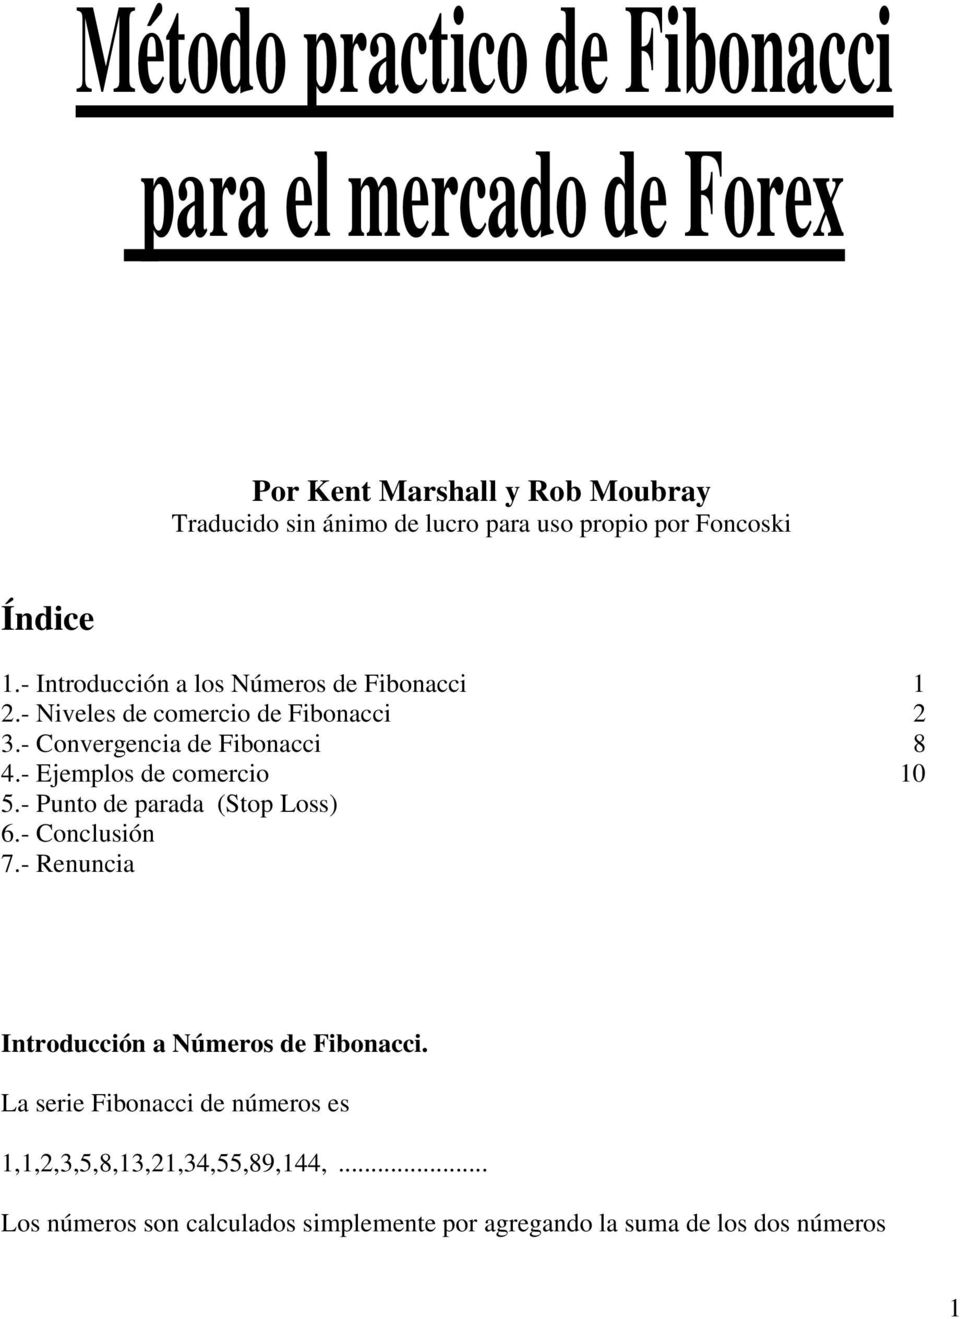 forex carte pdf